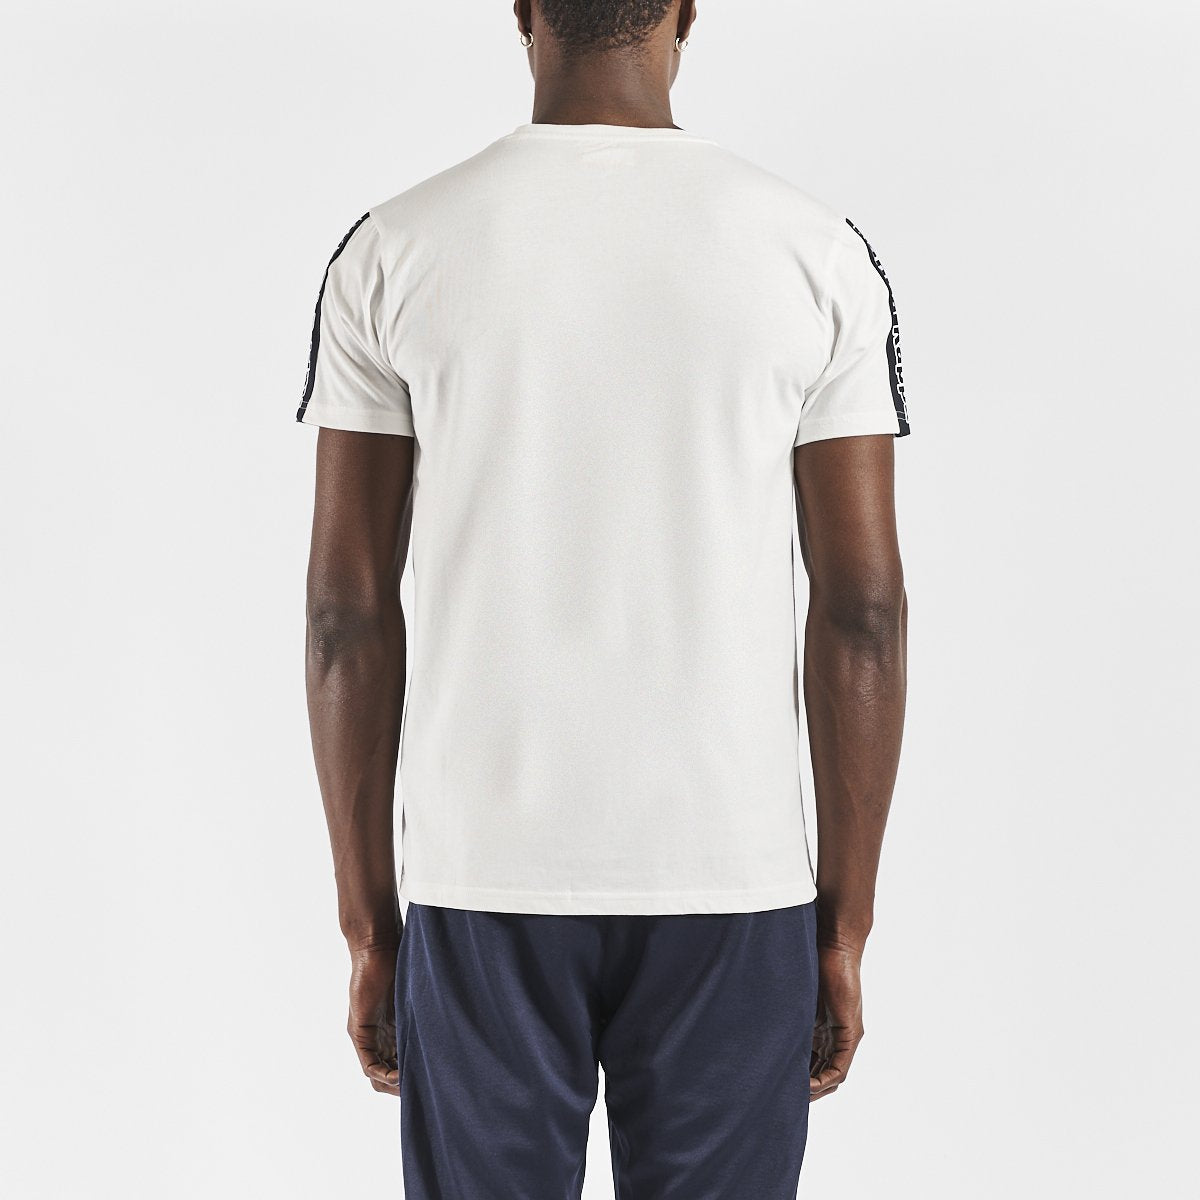 Camiseta Itap hombre blanco - Imagen 3